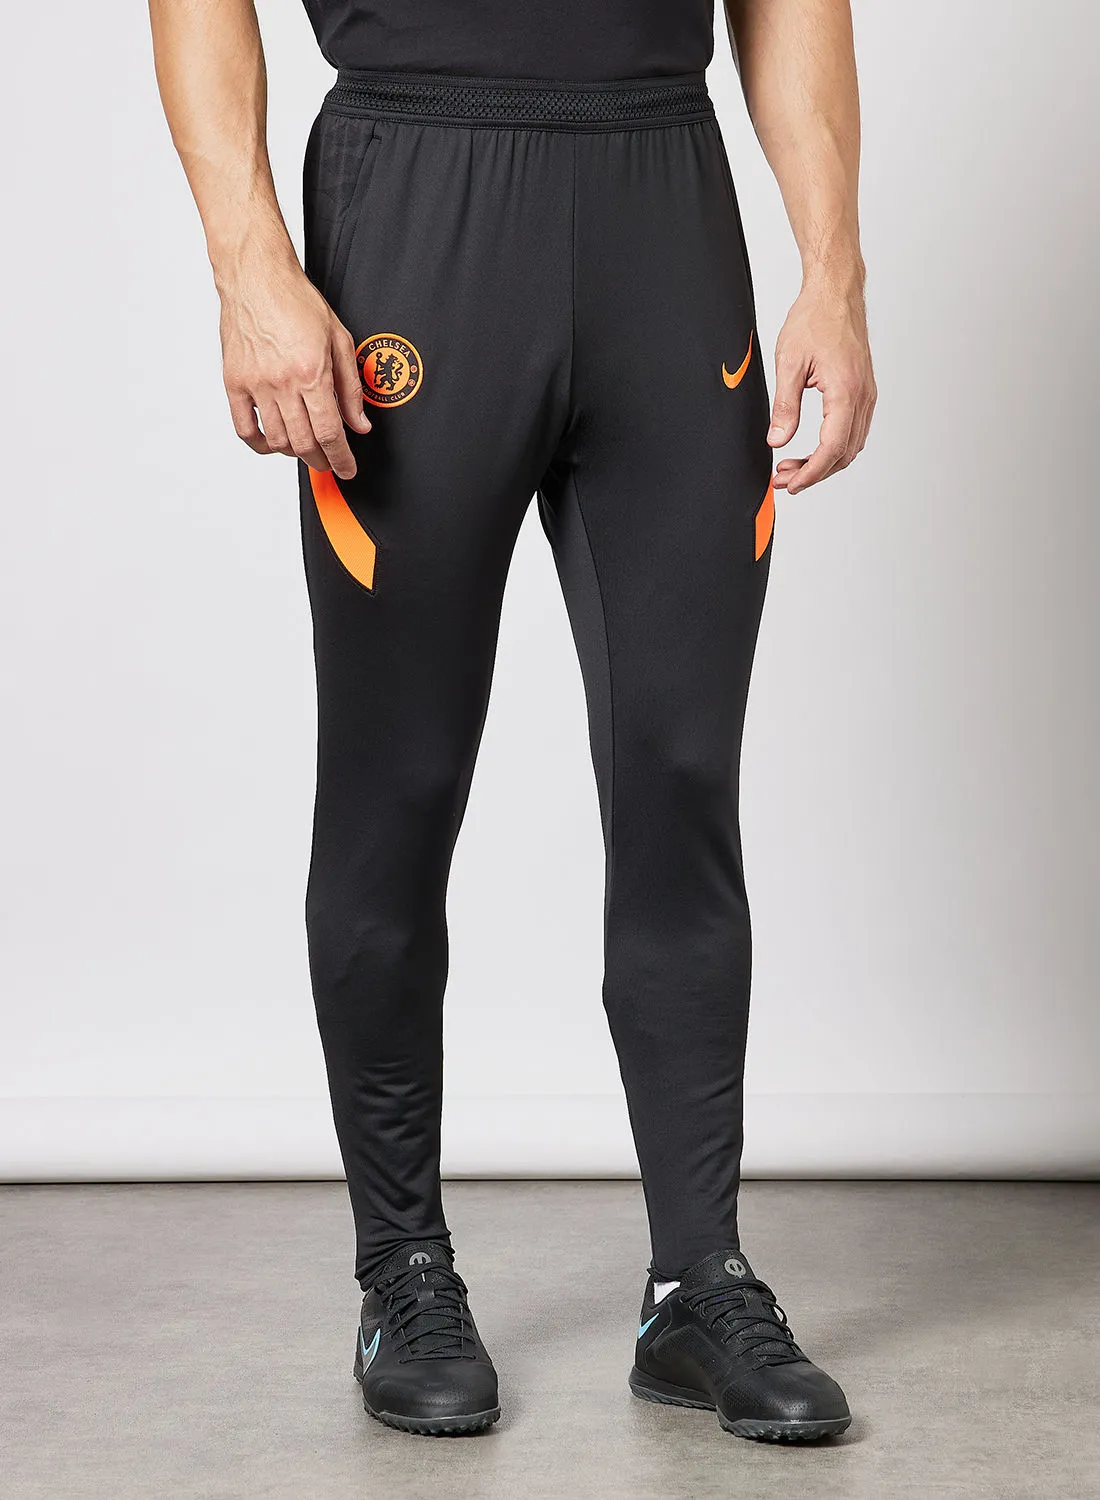 Nike Chelsa FC Strike Dri-FIT Knit Football Pants Black